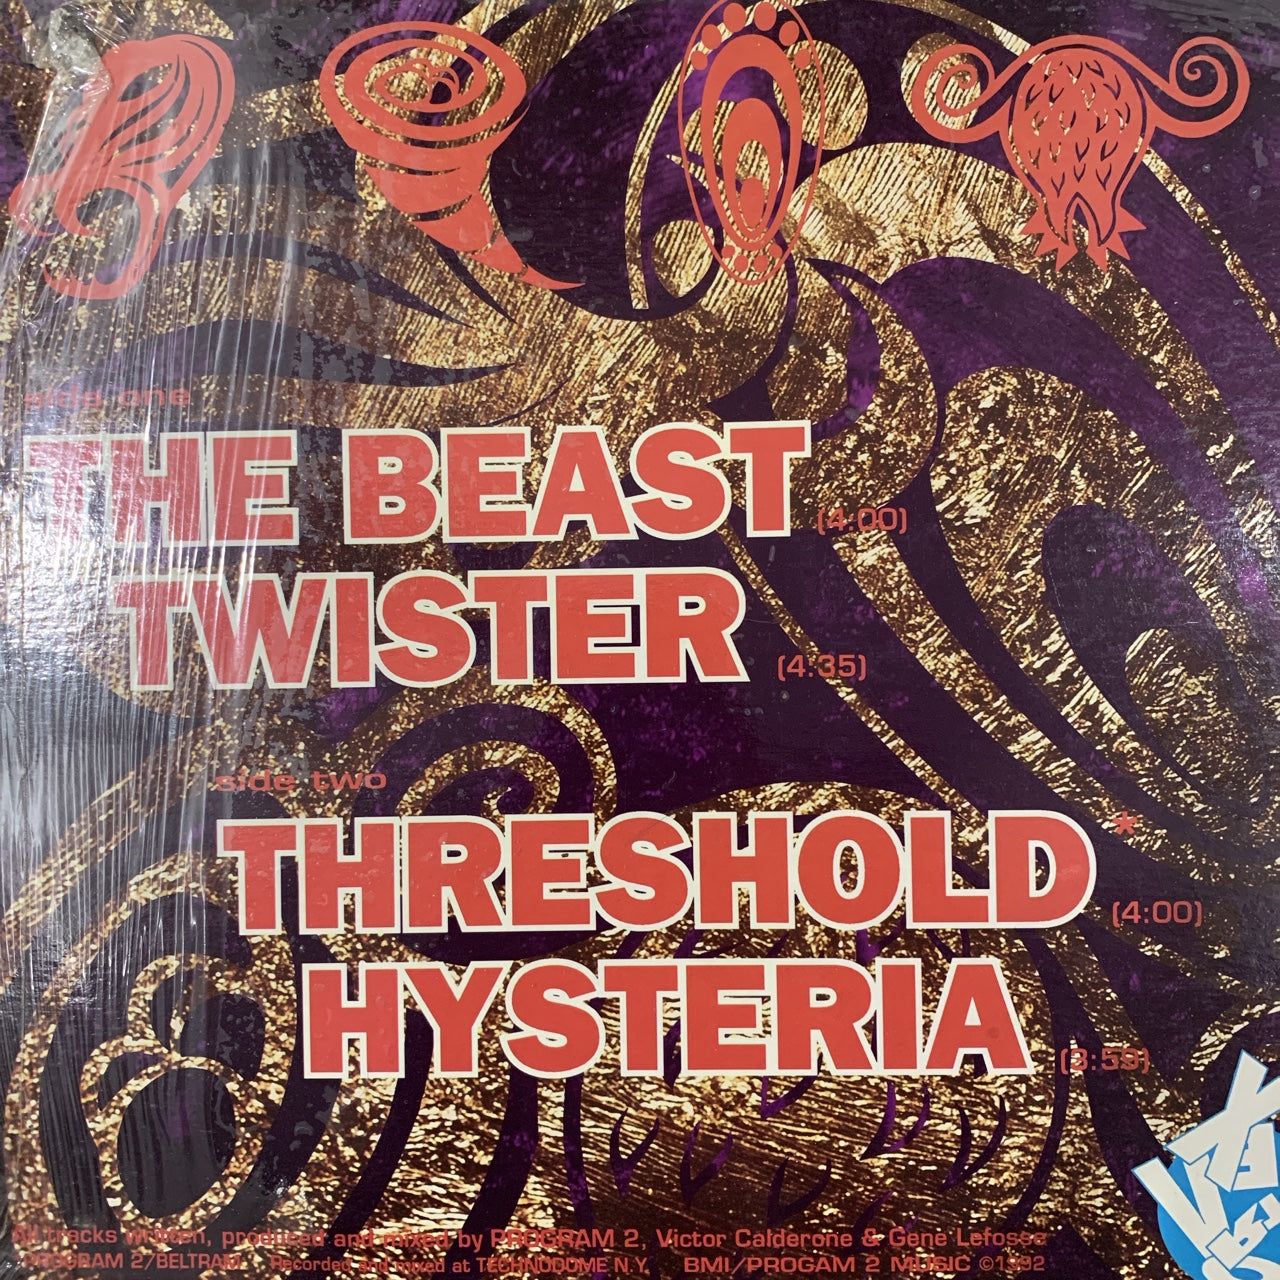 Program 2 From Hell EP Joey Beltram “The Beast” / “Twister” / “Threshold” / “Hysteria”